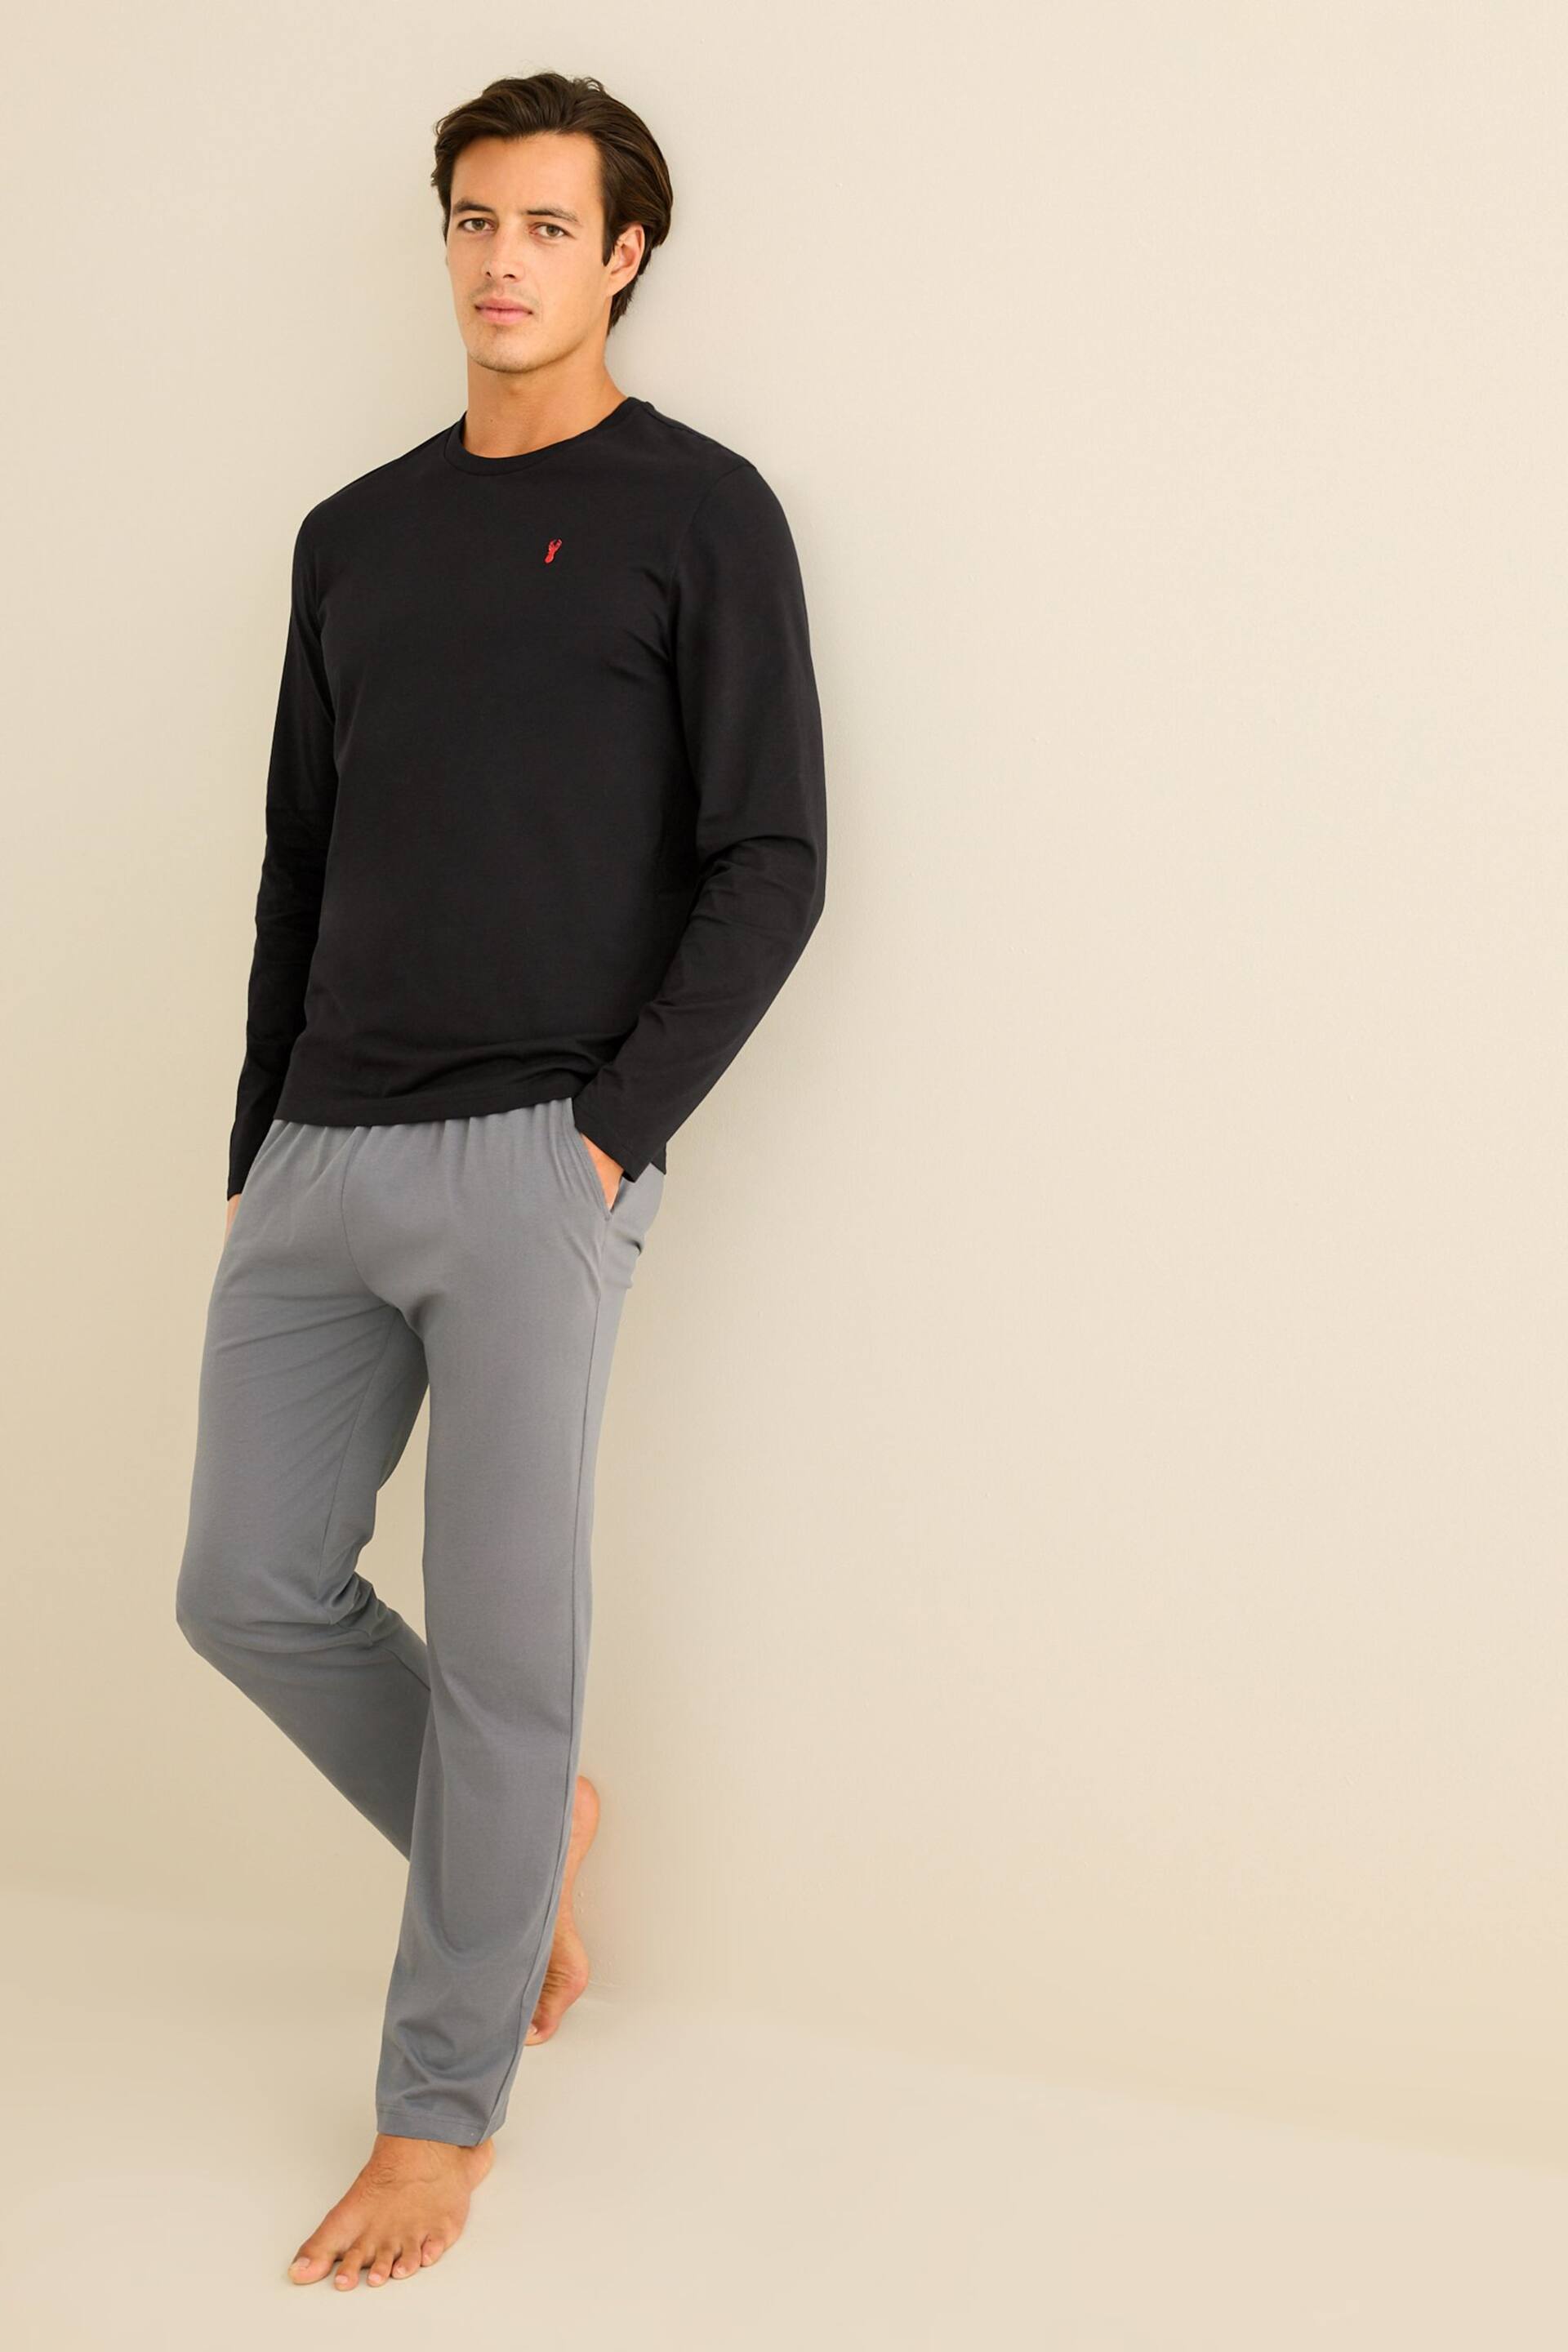 Black/Grey Long Sleeve Jersey Pyjamas Set - Image 3 of 11